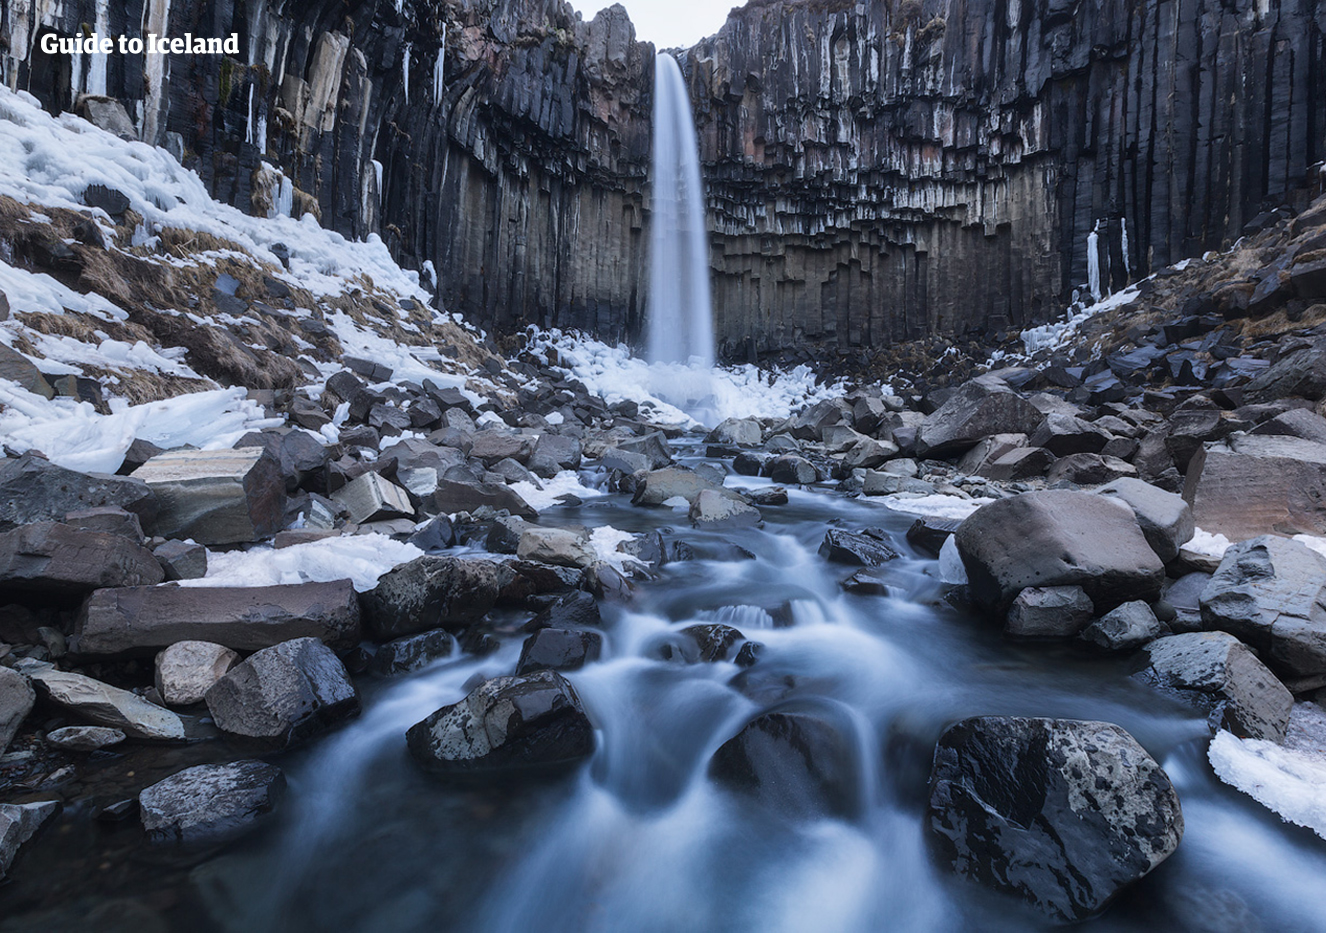 Svartifoss in Skaftafell is a waterfall surrounded by hexagonal basalt columns.